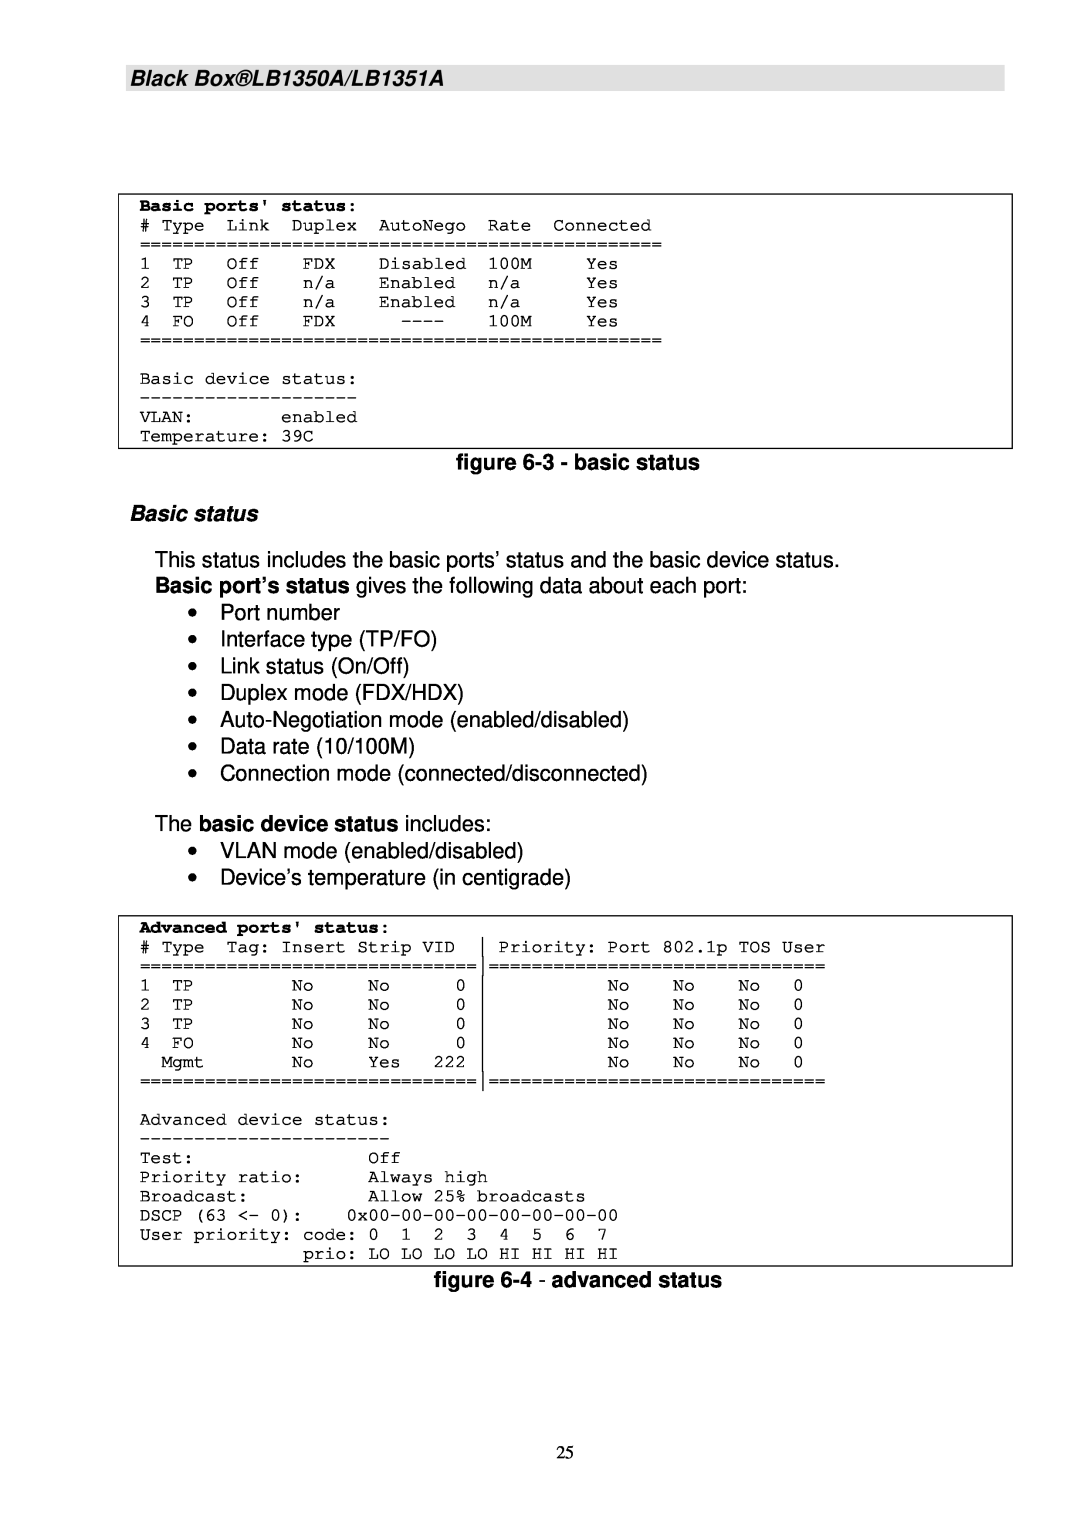 Black Box manual Black BoxLB1350A/LB1351A, 3 - basic status, Basic status, The basic device status includes 